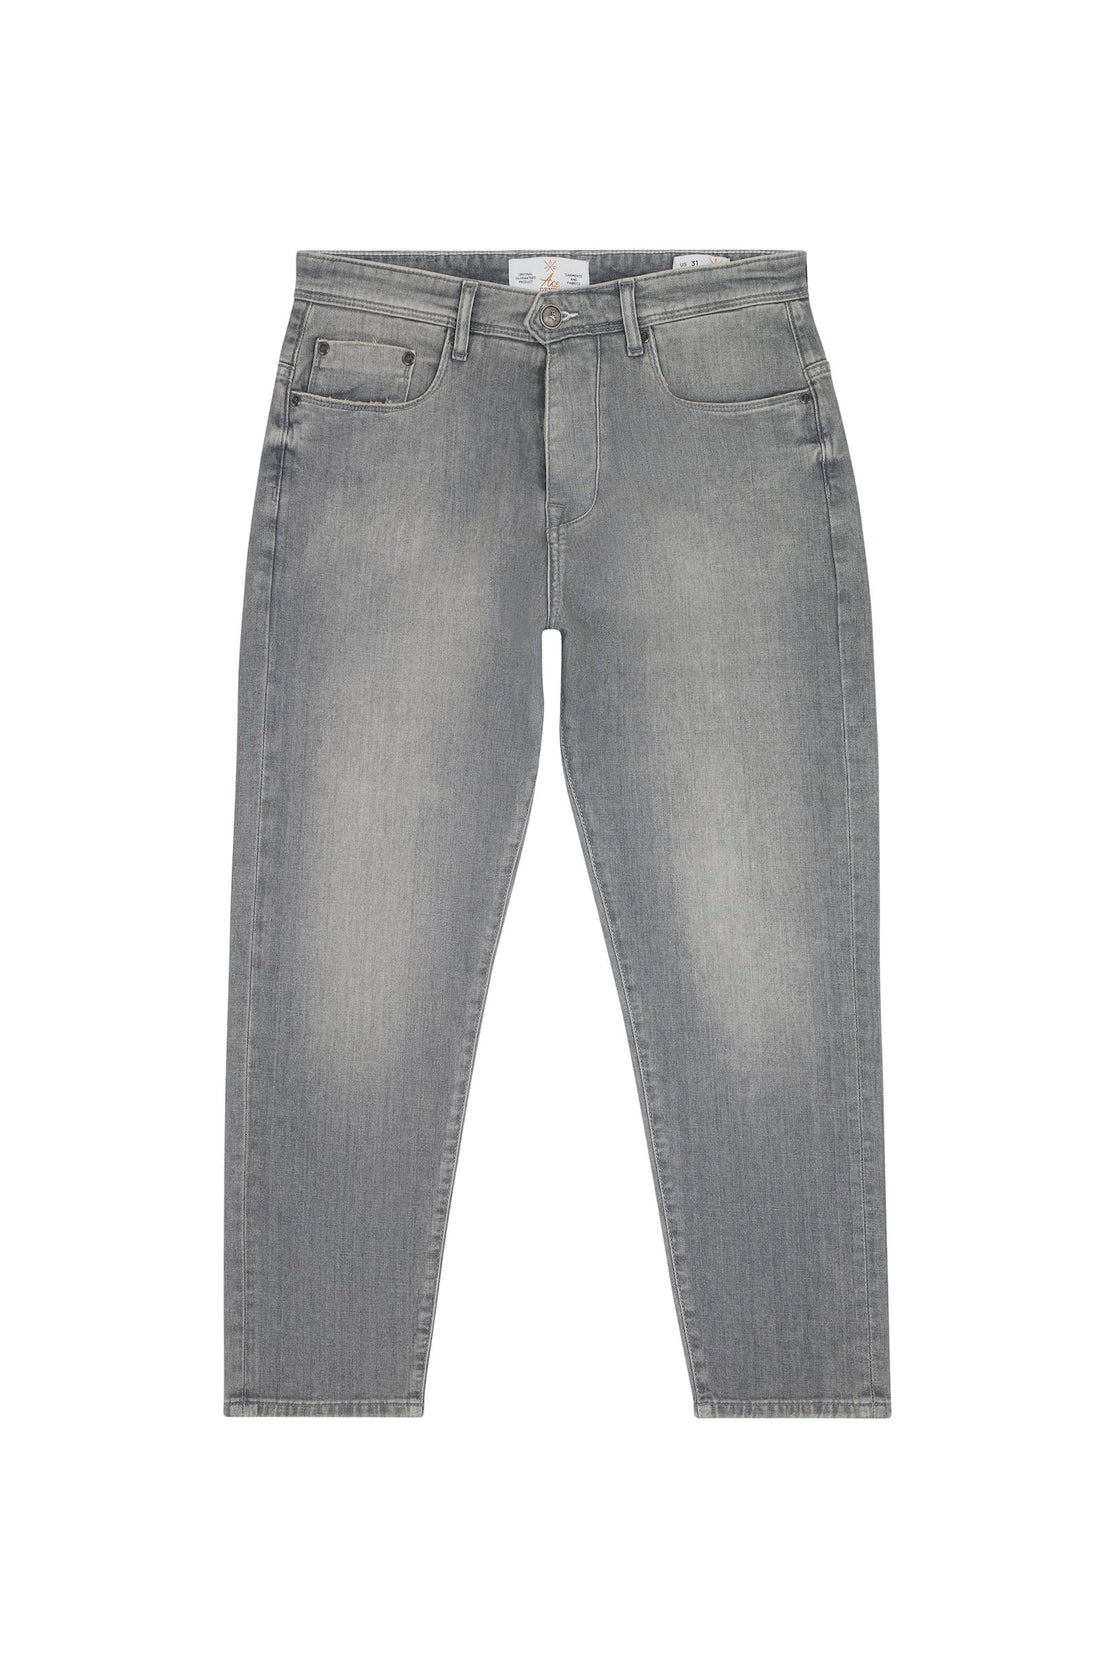 jeans homme coupe large gris clair tissu italien